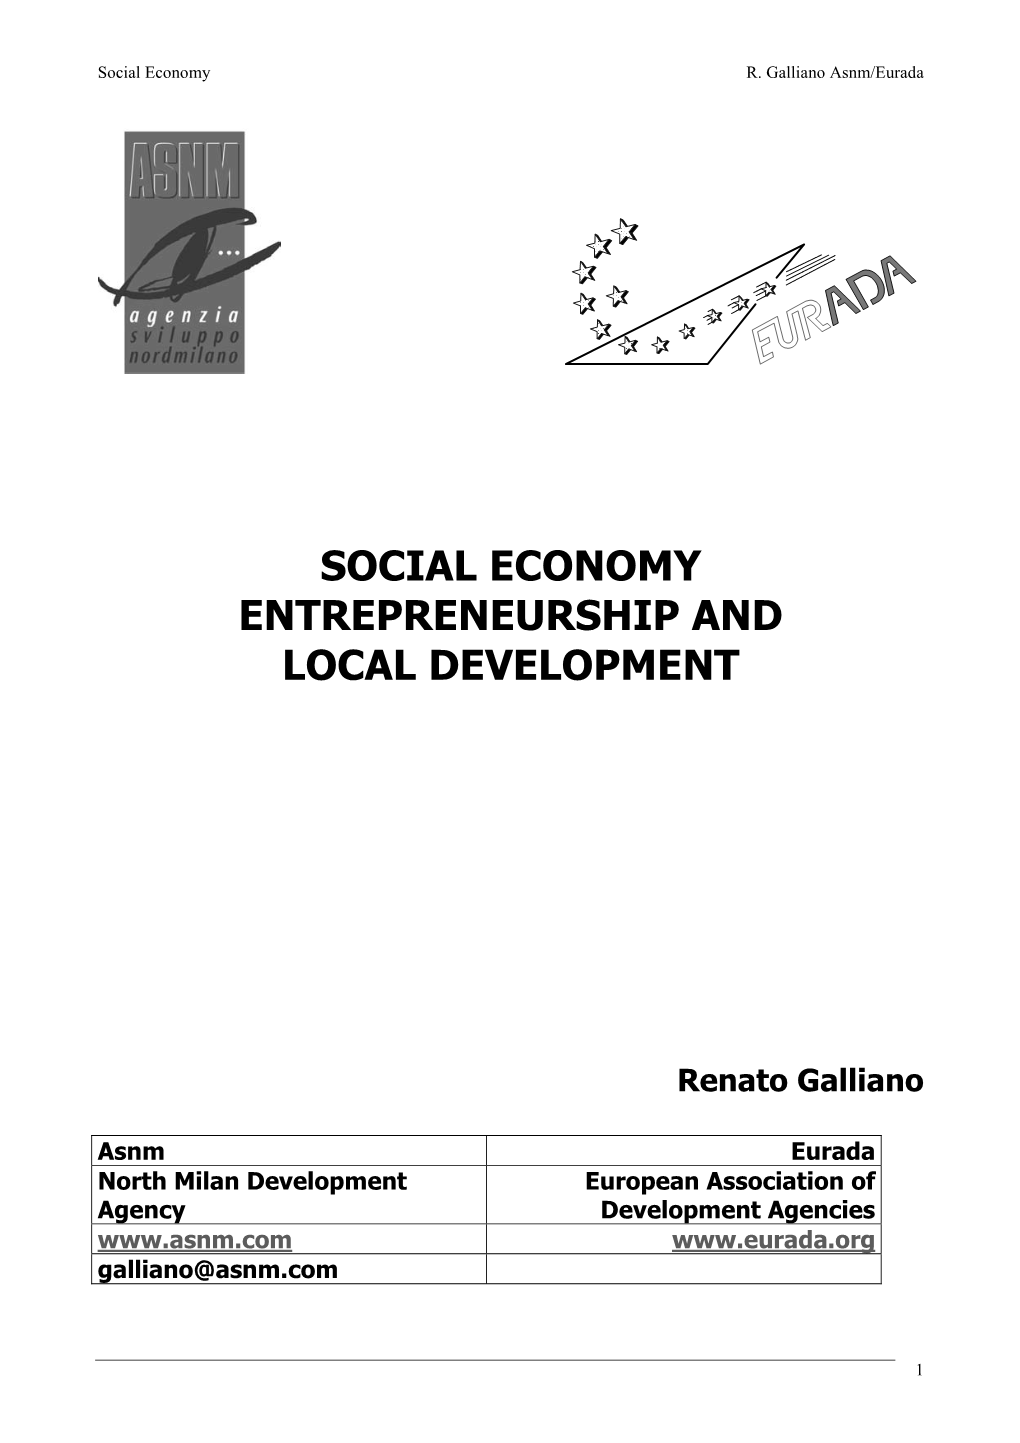 Social Economy Entrepreneurship and Local Development